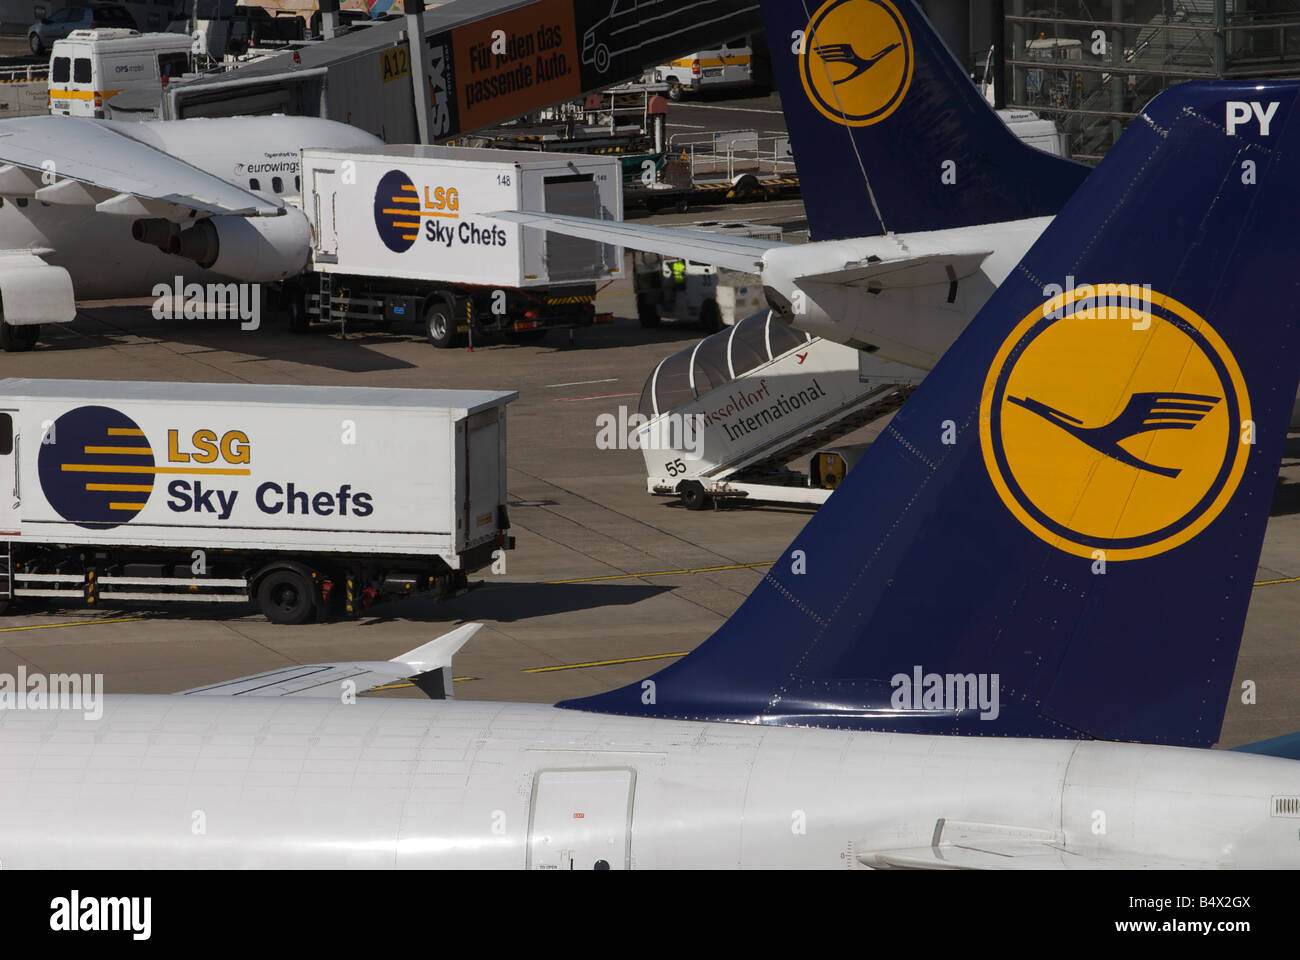 Lufthansa passenger aircraft, Dusseldorf, North Rhine-Westphalia, Germany. Stock Photo